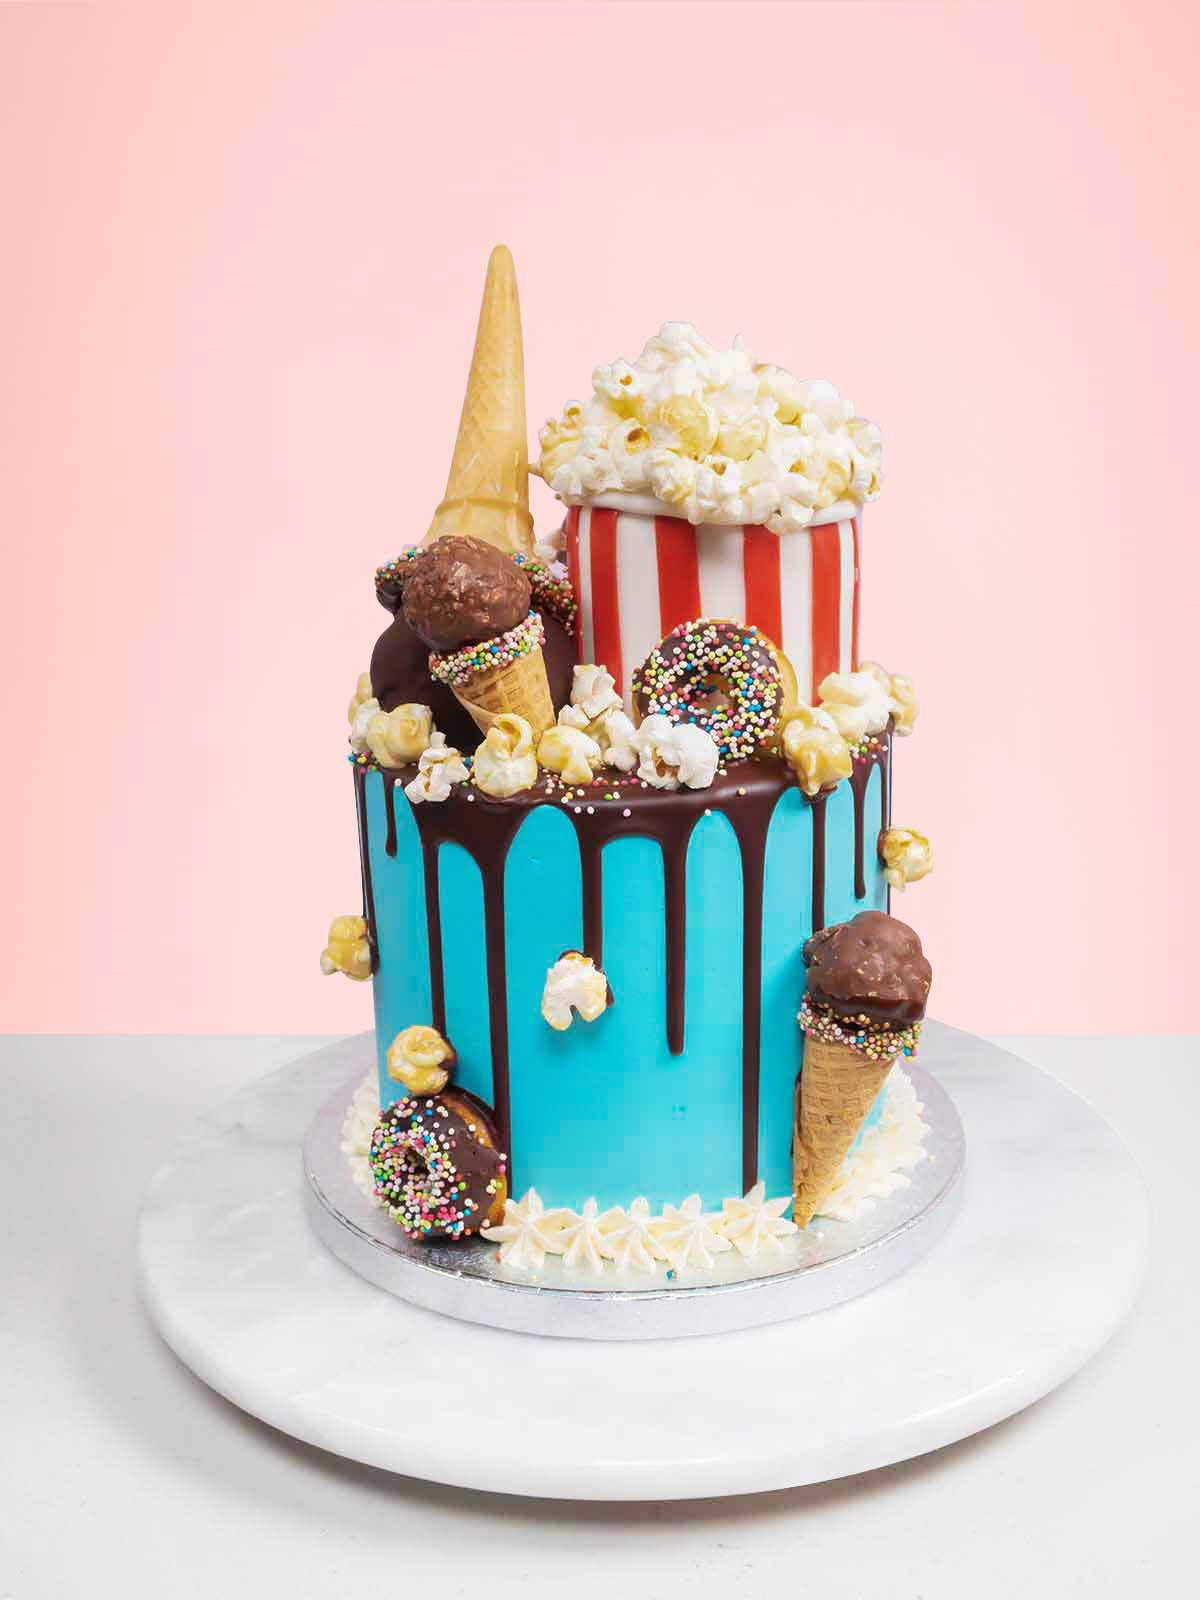 Fondant wrapped cake | Order Birthday Cake online for Husband - Kukkr